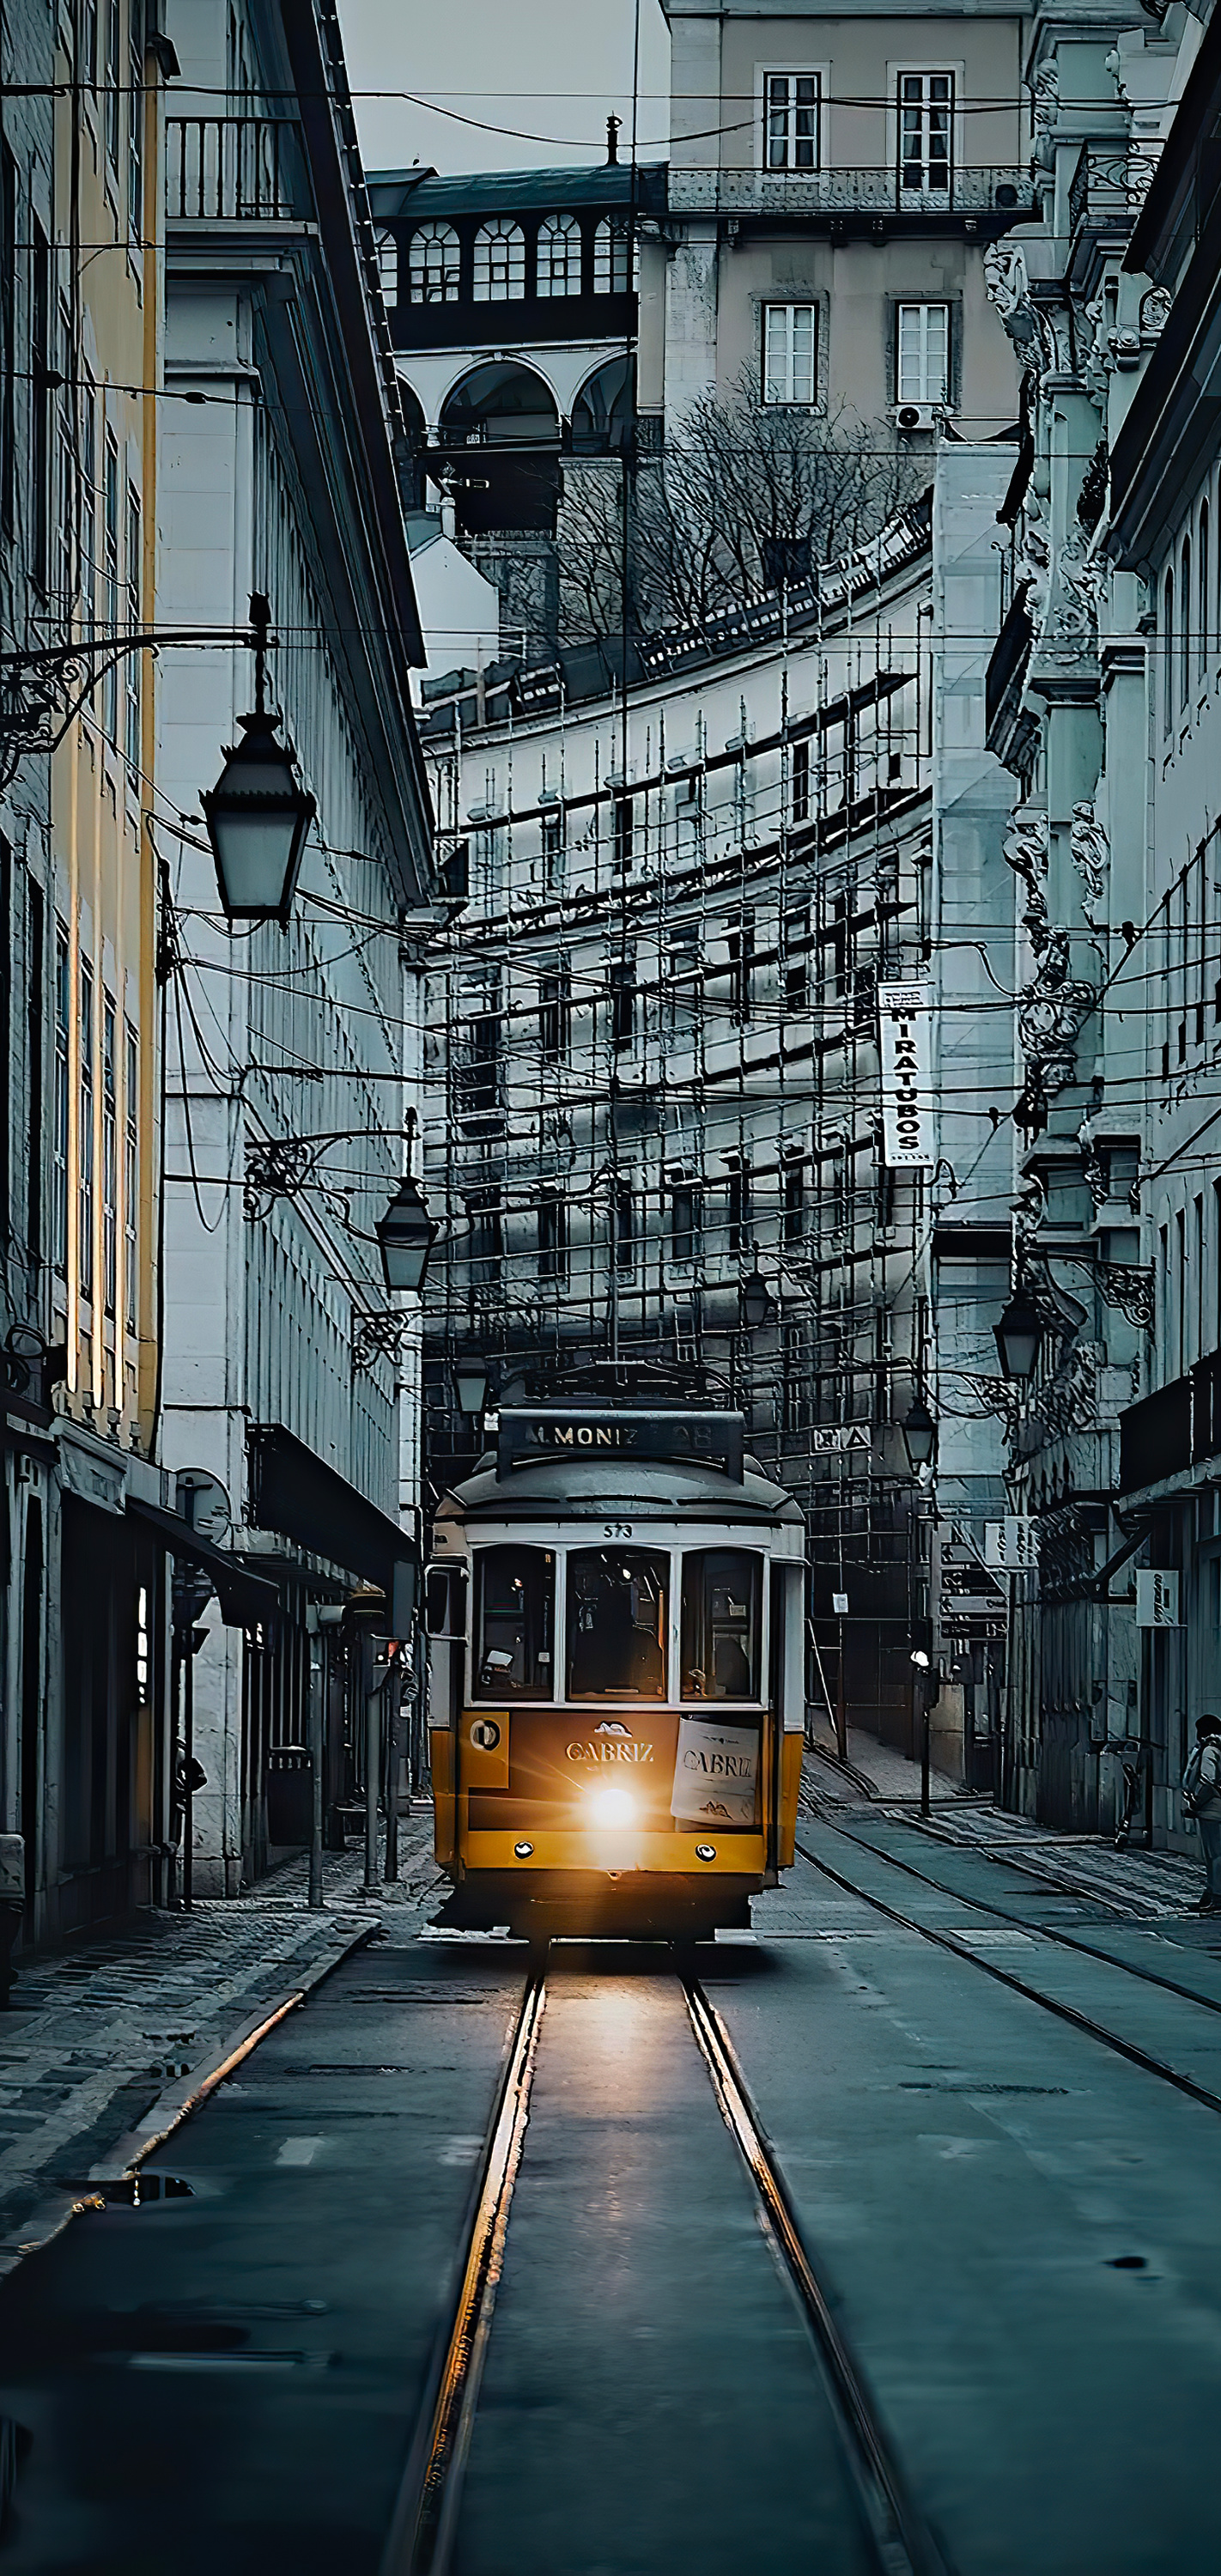 Old town streetcar by João Bernardino